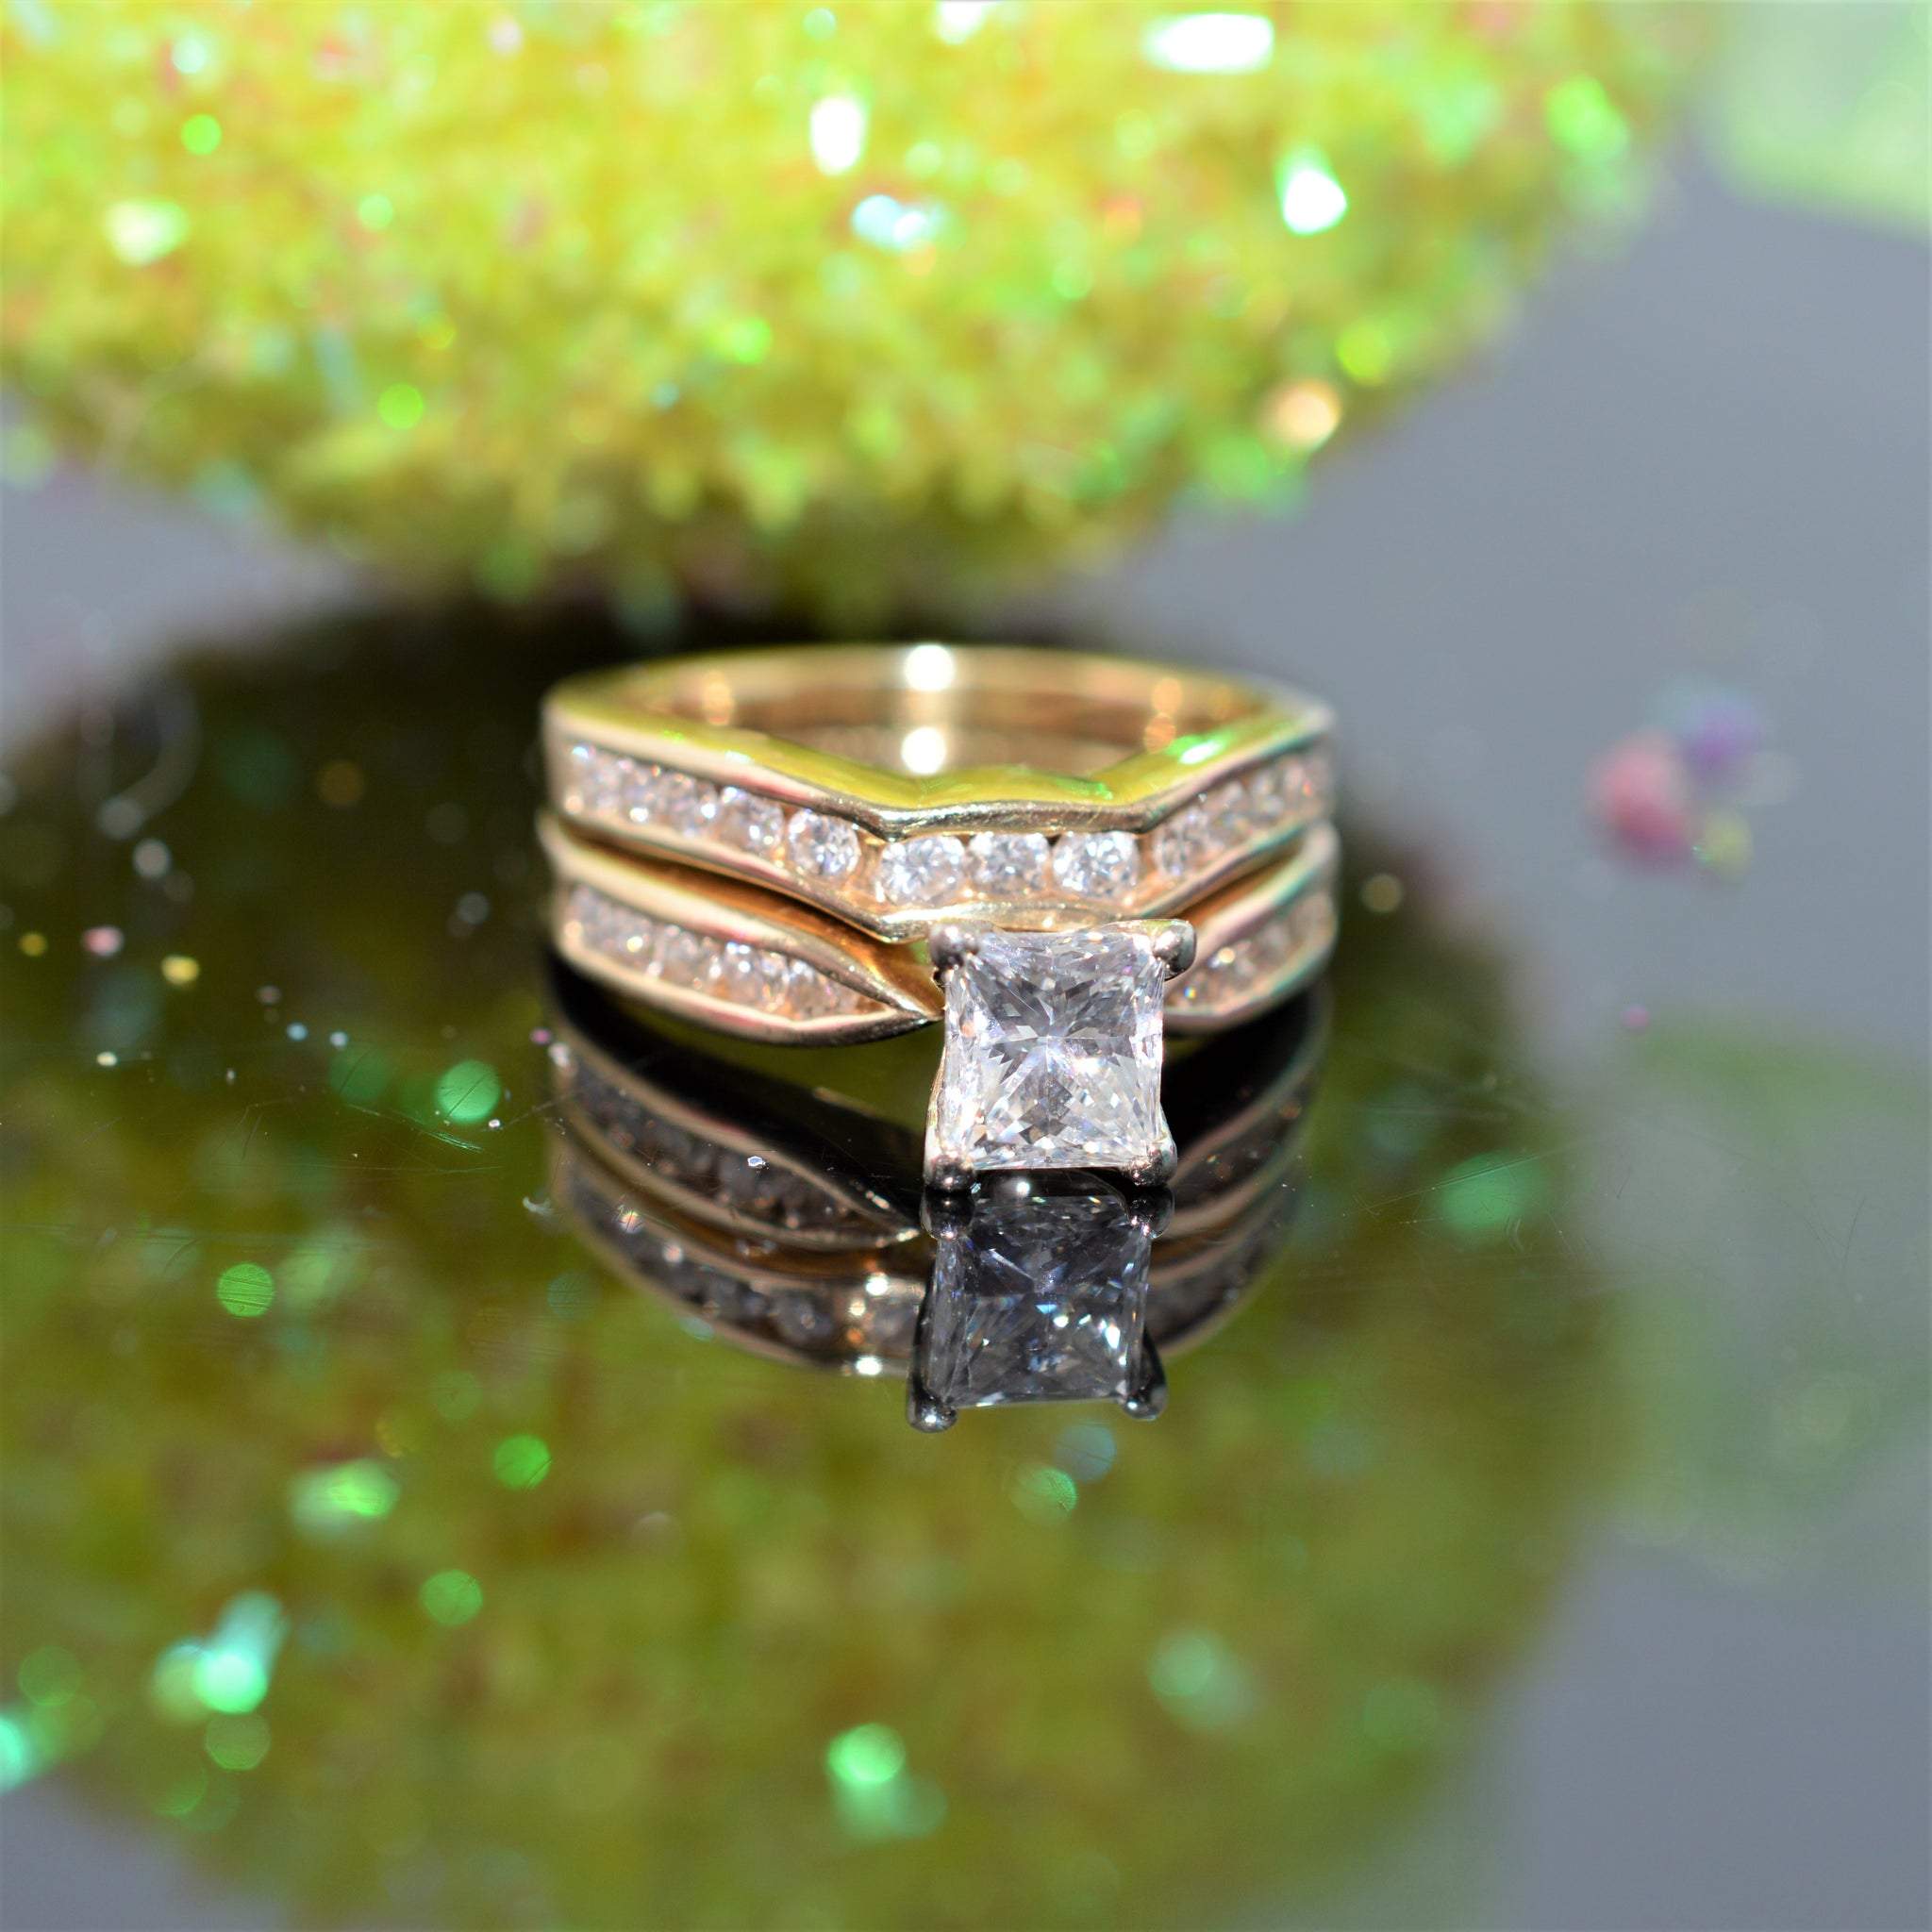 Art Deco Orange Blossom Diamond Engagement Ring Yellow and White Gold 14K, Antique Vintage Estate Jewelry